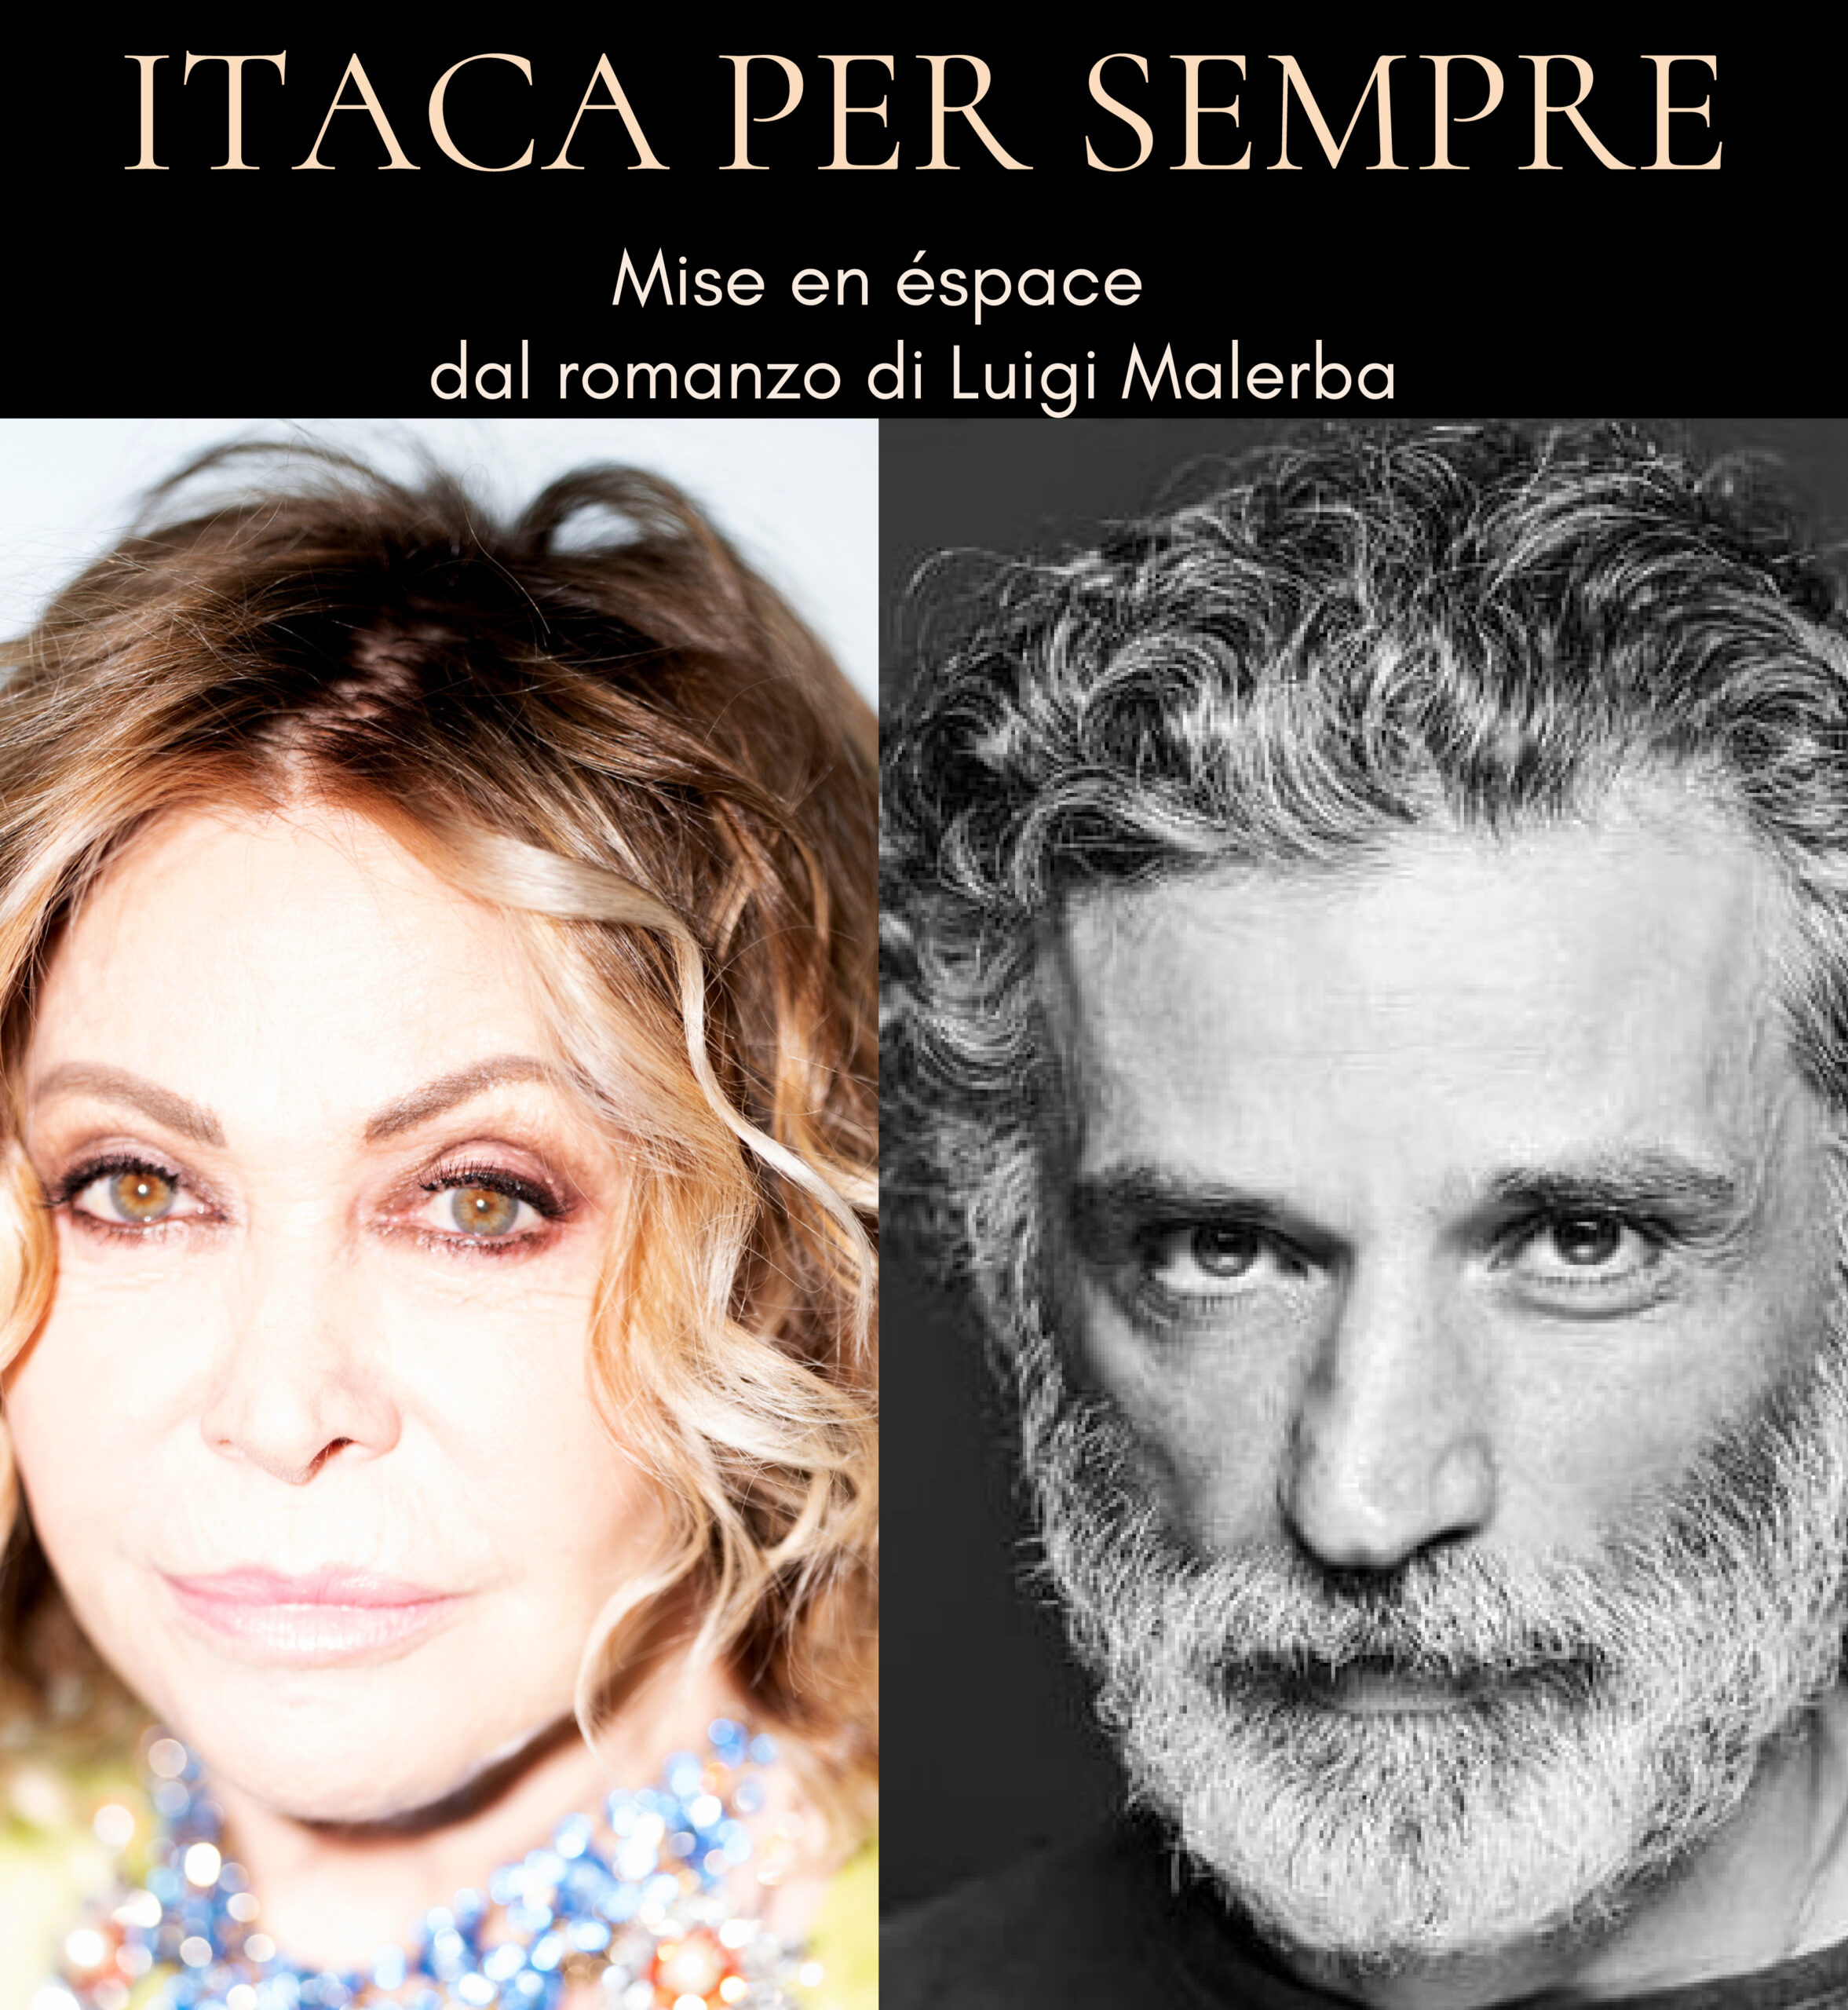 ITACA PER SEMPRE con Paola Quattrini ed Enrico Lo Verso